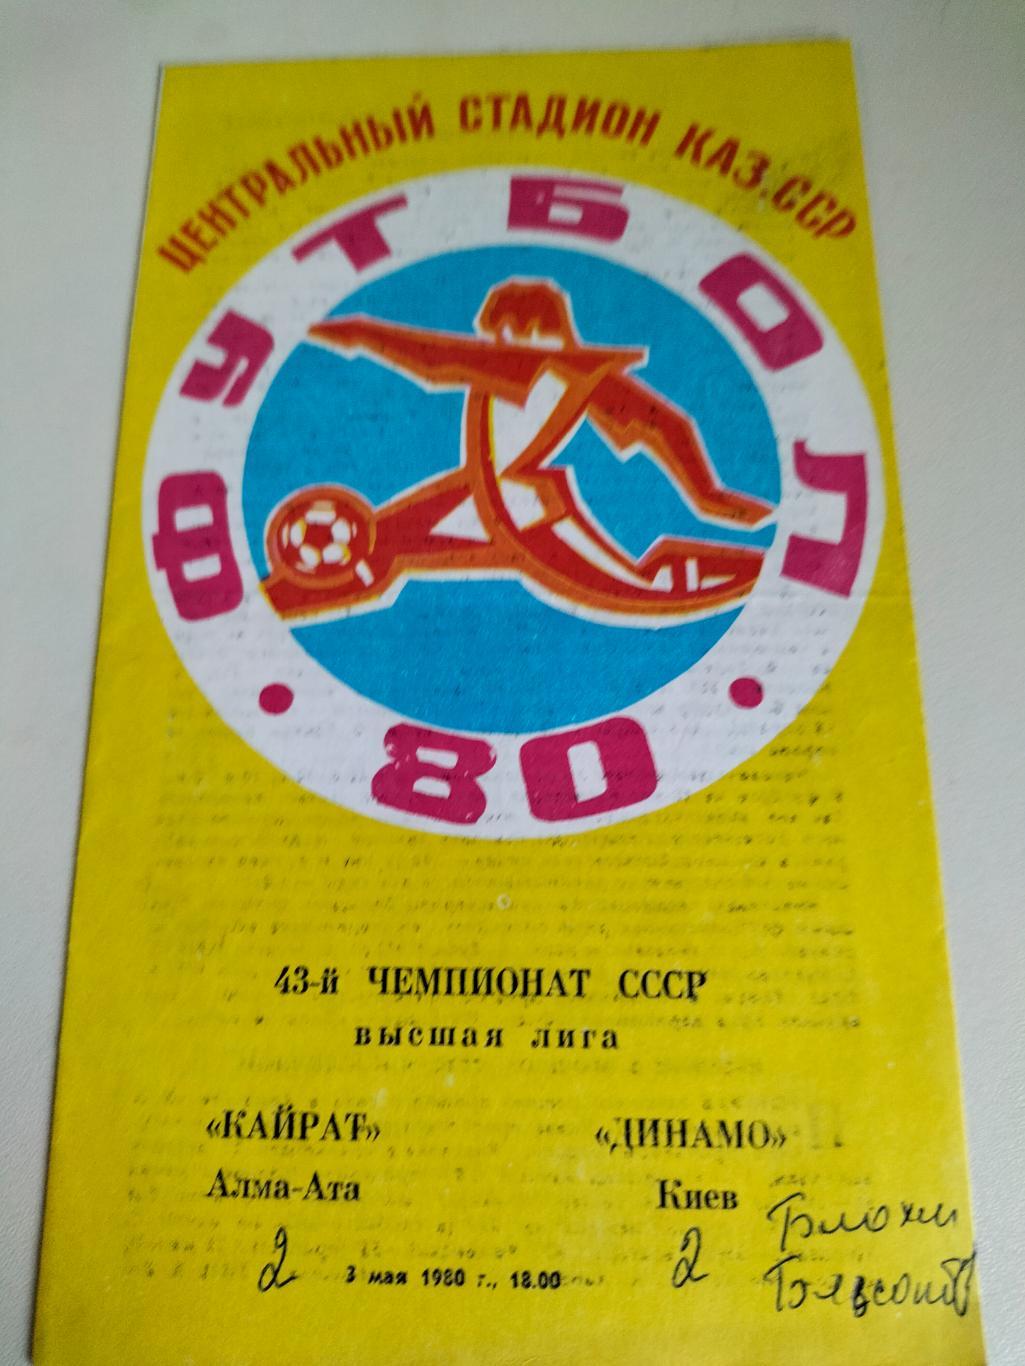 Кайрат Алма - Ата - Динамо Киев 1980